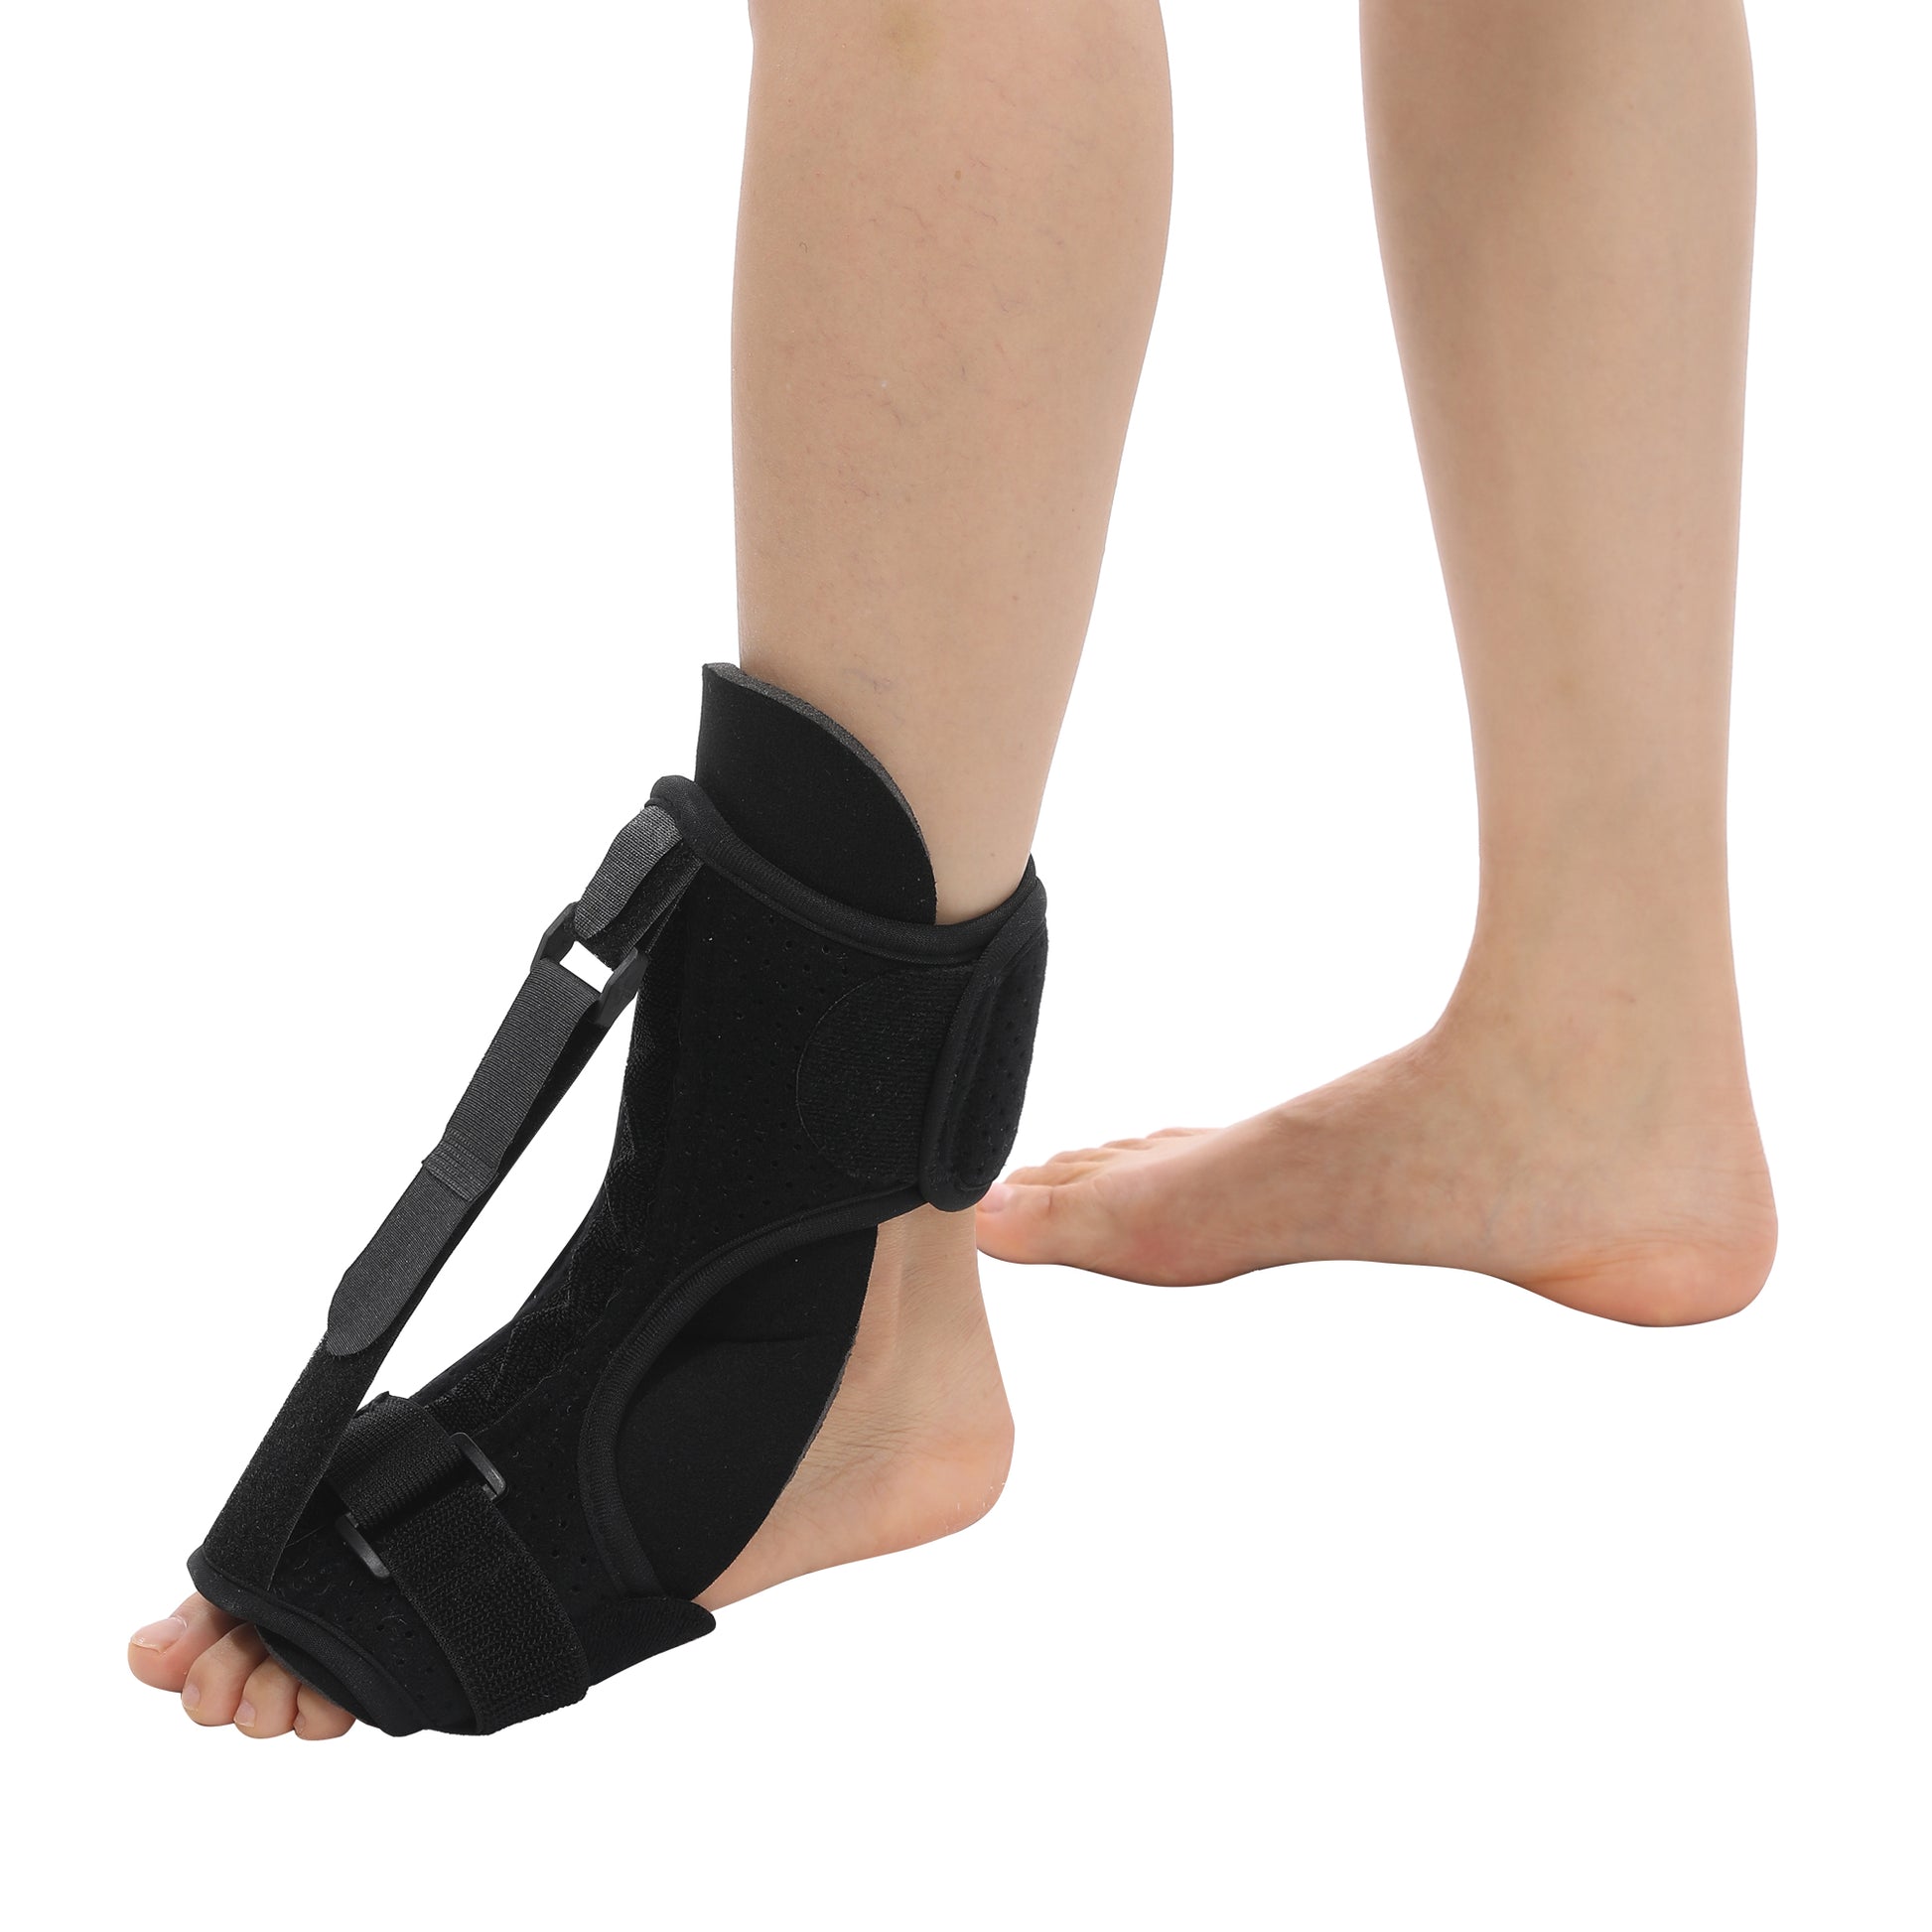 Locisne Plantar Fasciitis Night Splint for Heel Pain Relief Foot